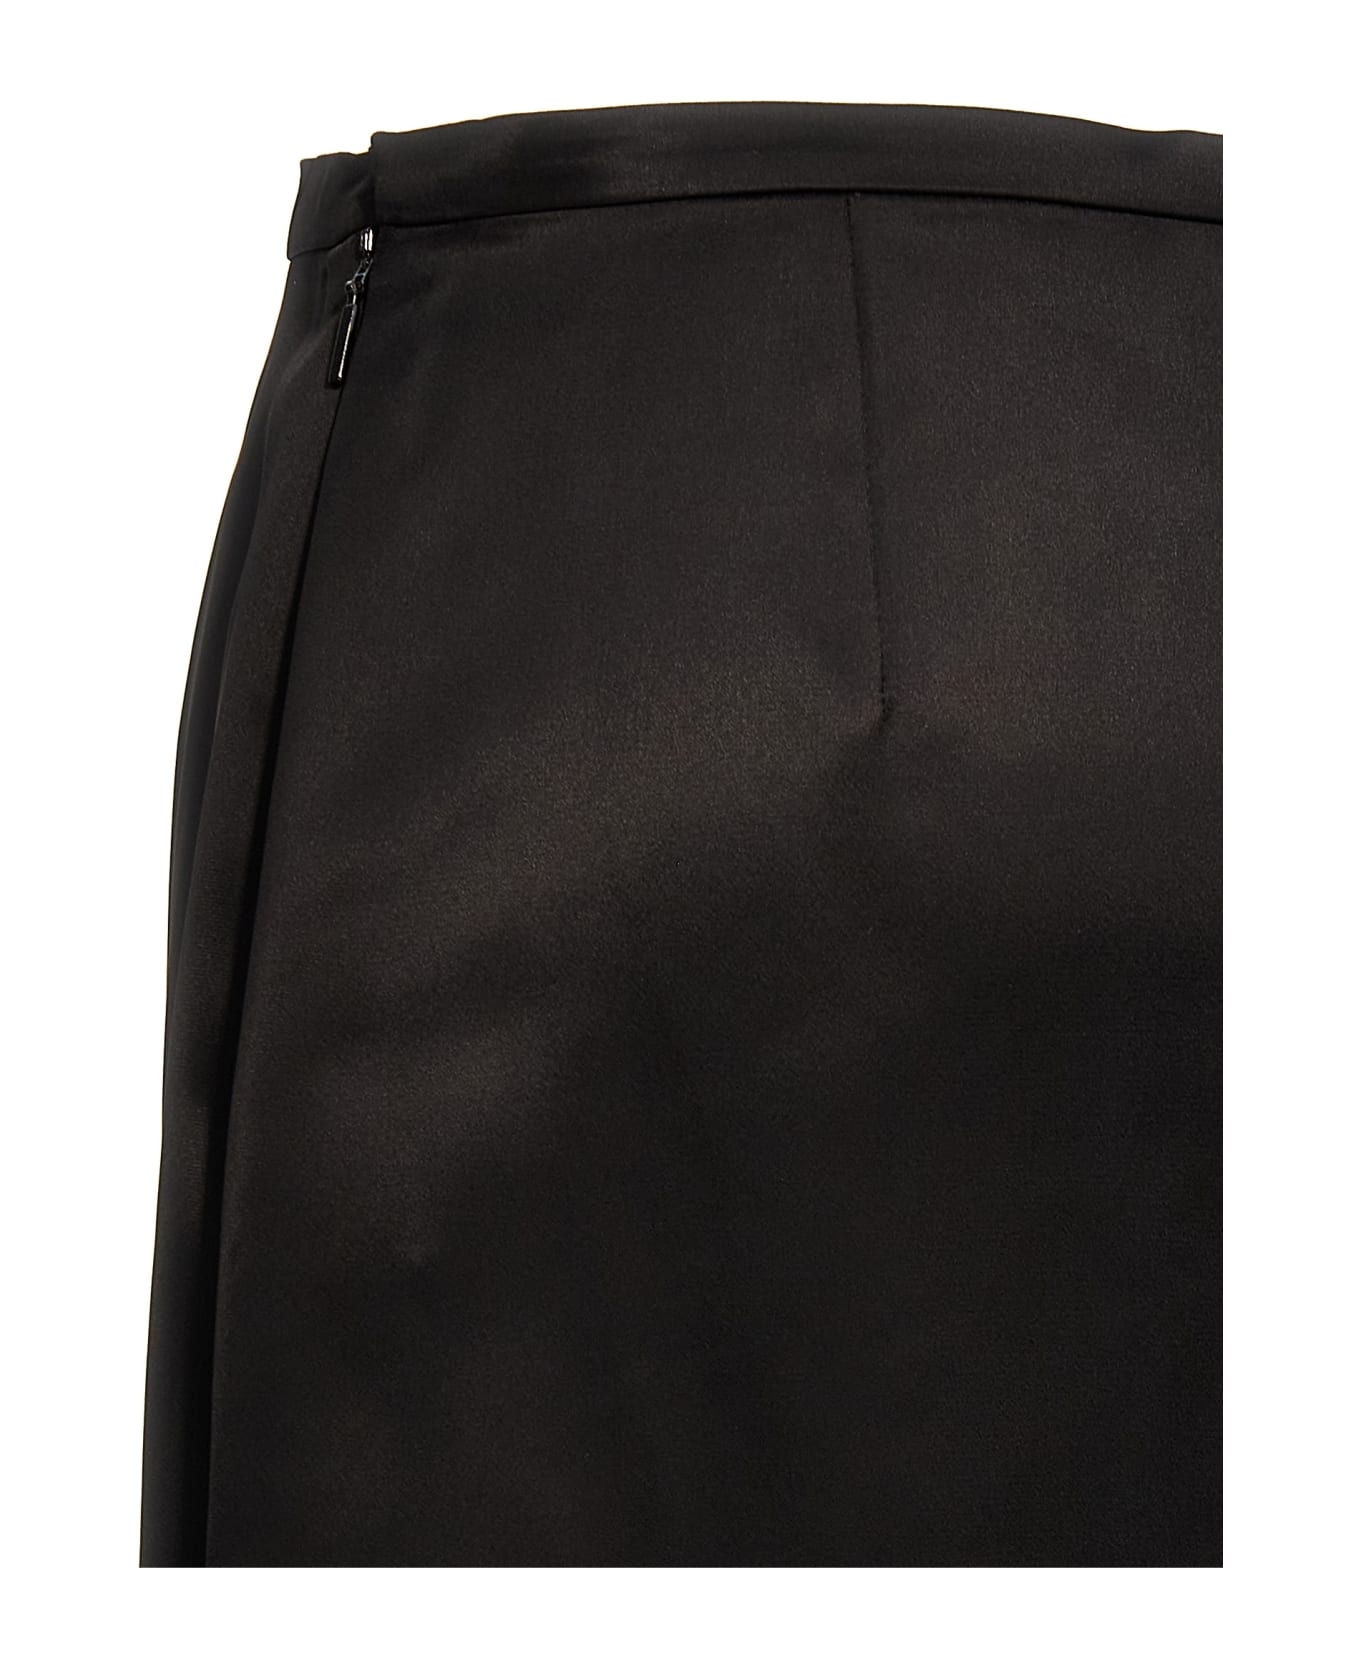 Saint Laurent Satin Skirt - Black   スカート